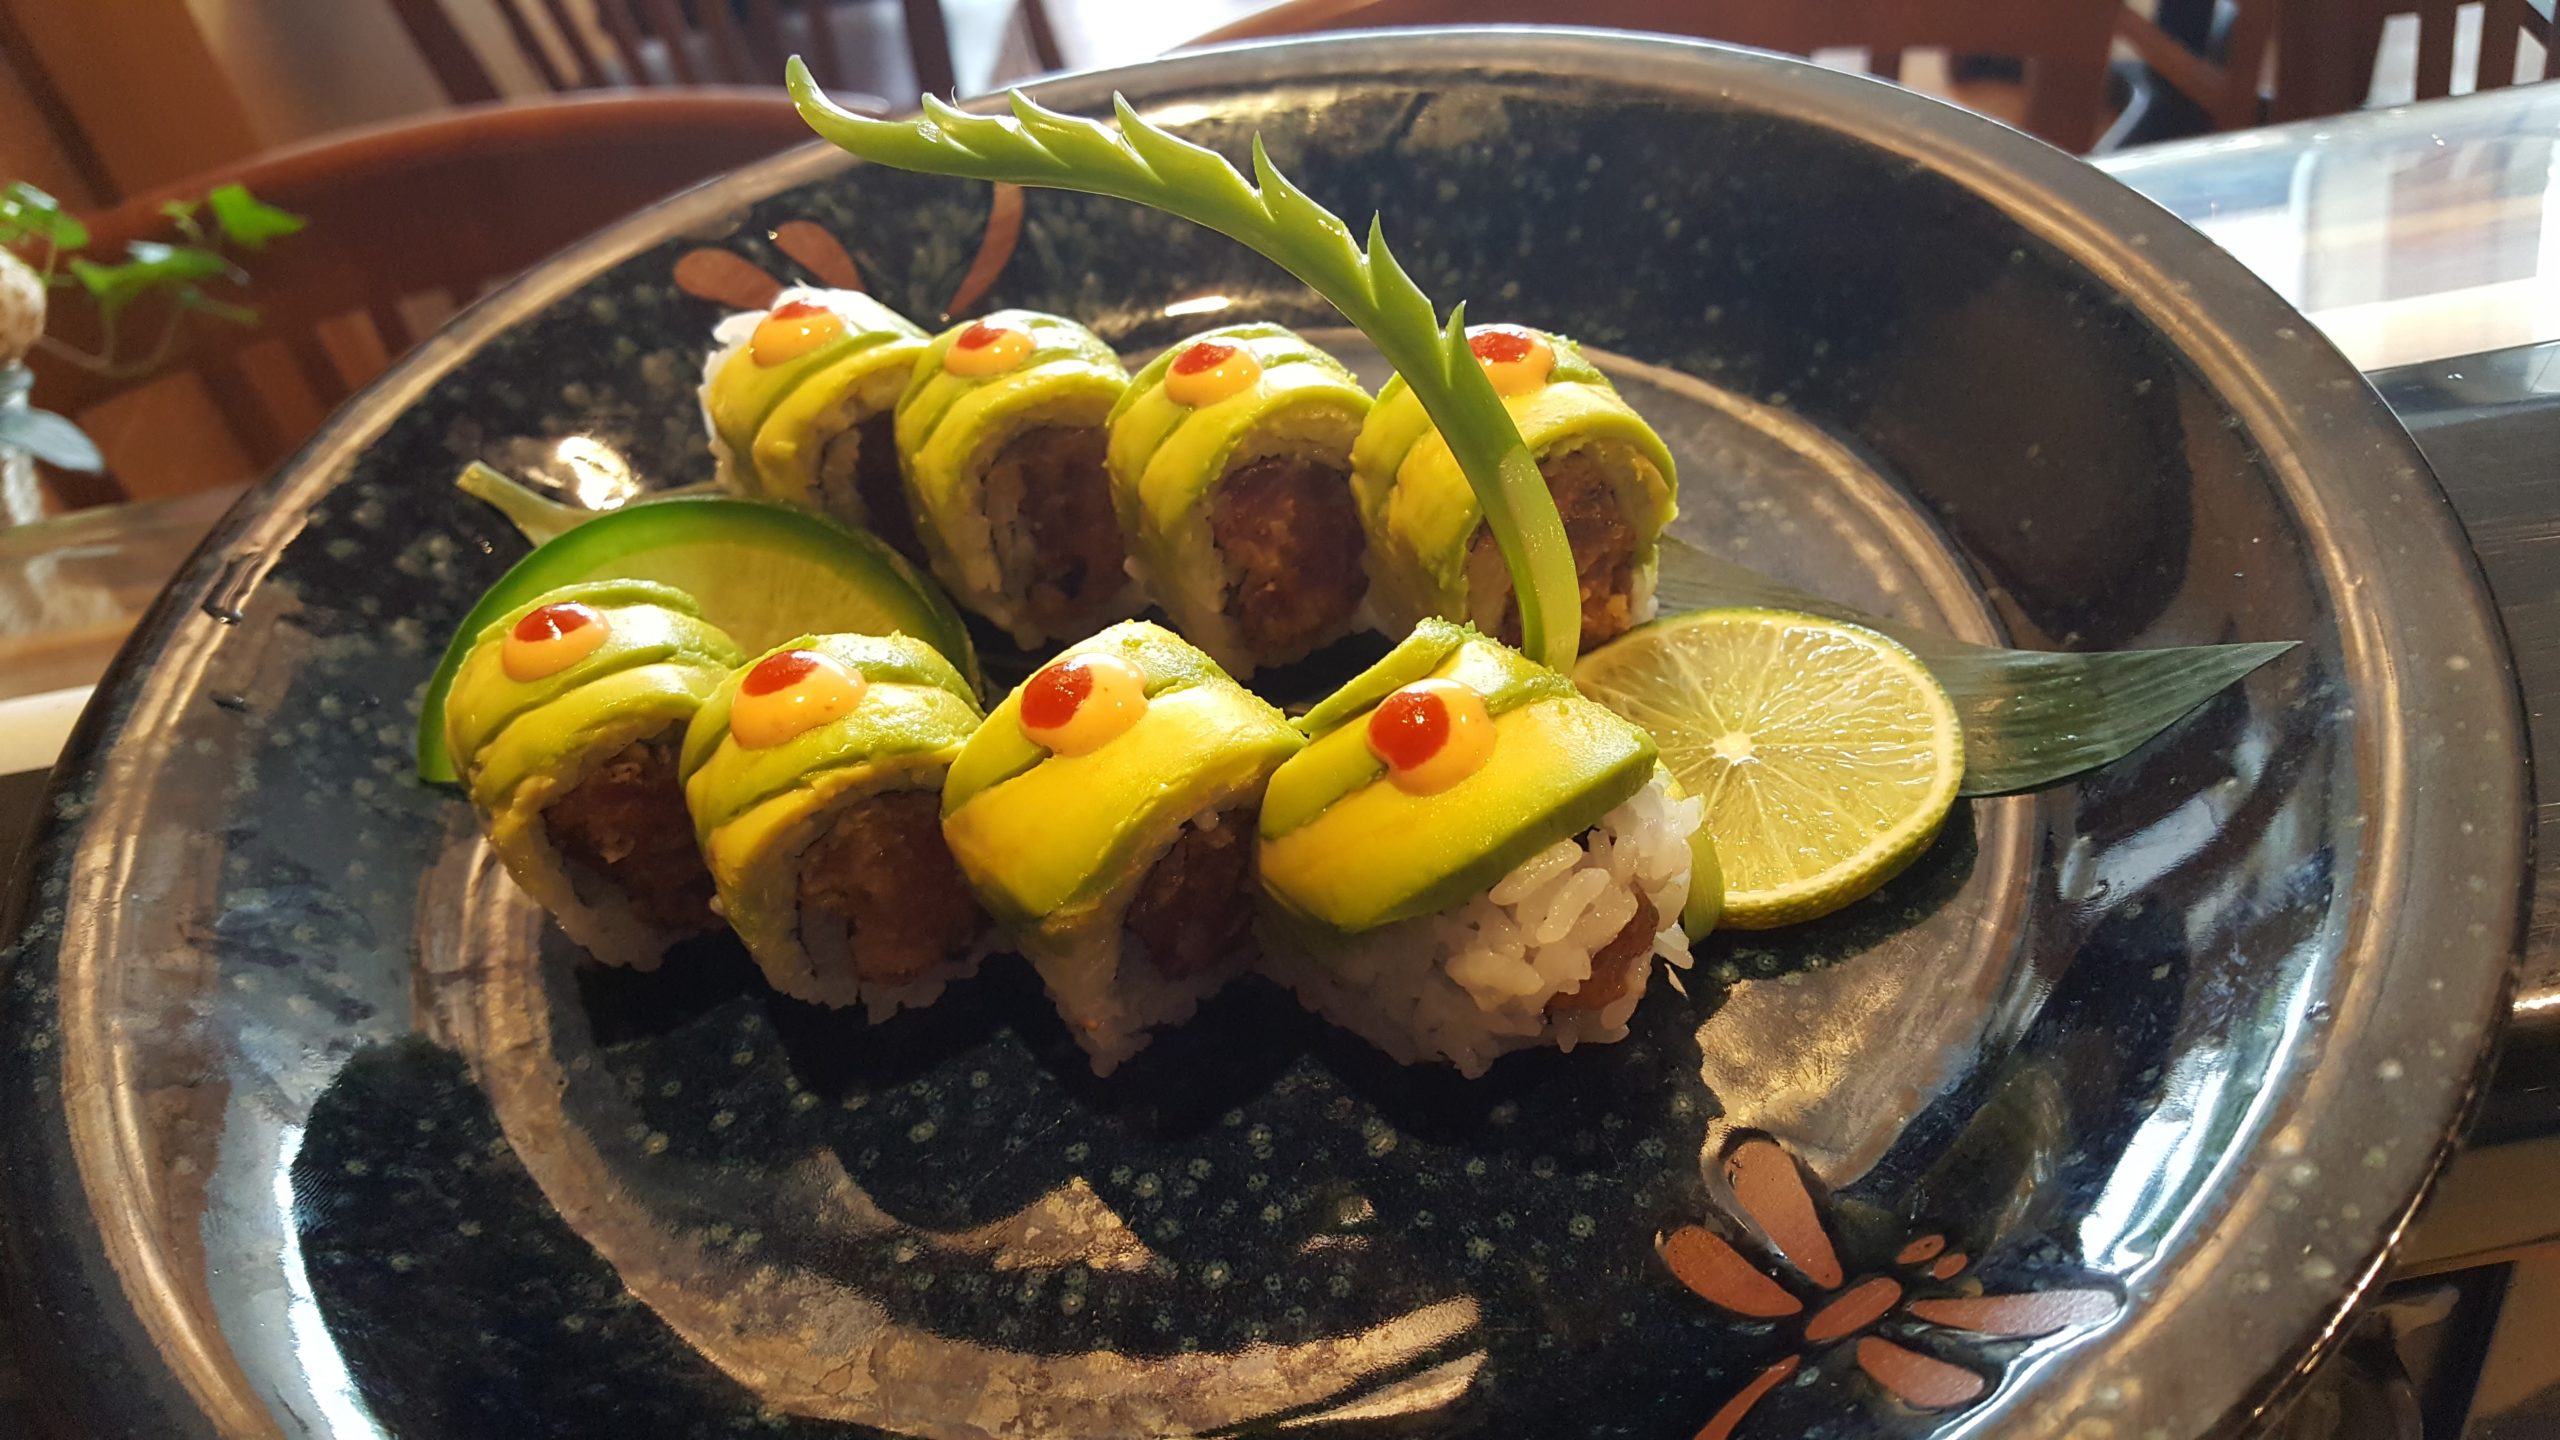 Niwa Sushi